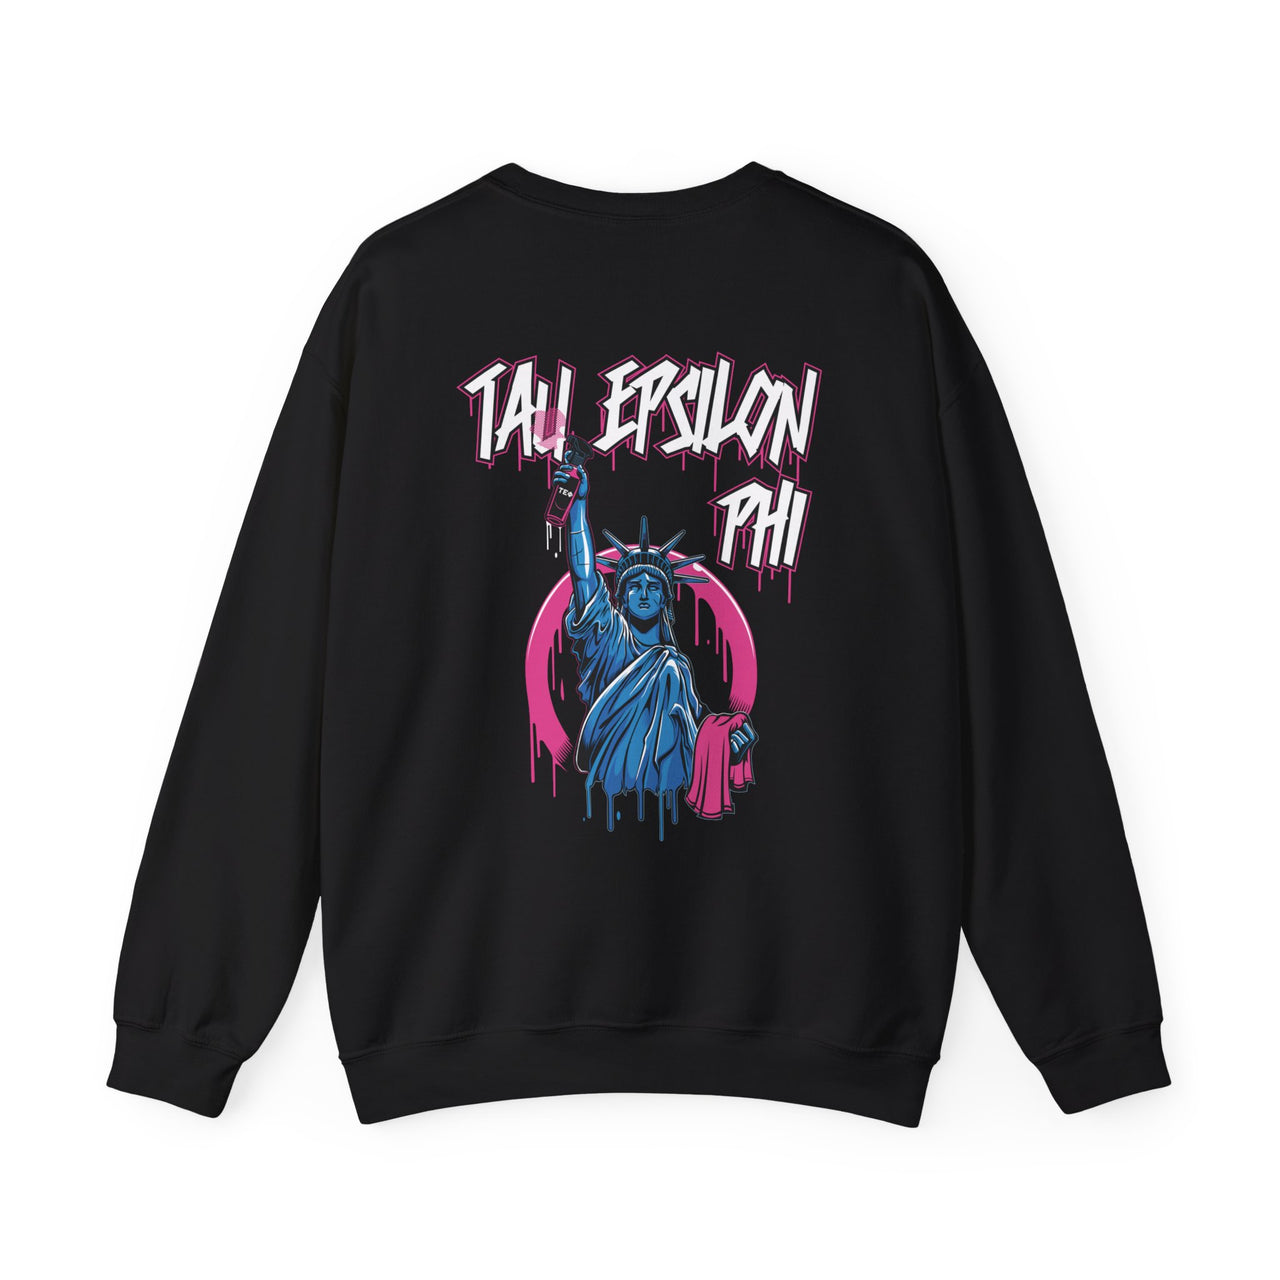 Tau Epsilon Phi Graphic Crewneck Sweatshirt | Liberty Rebel